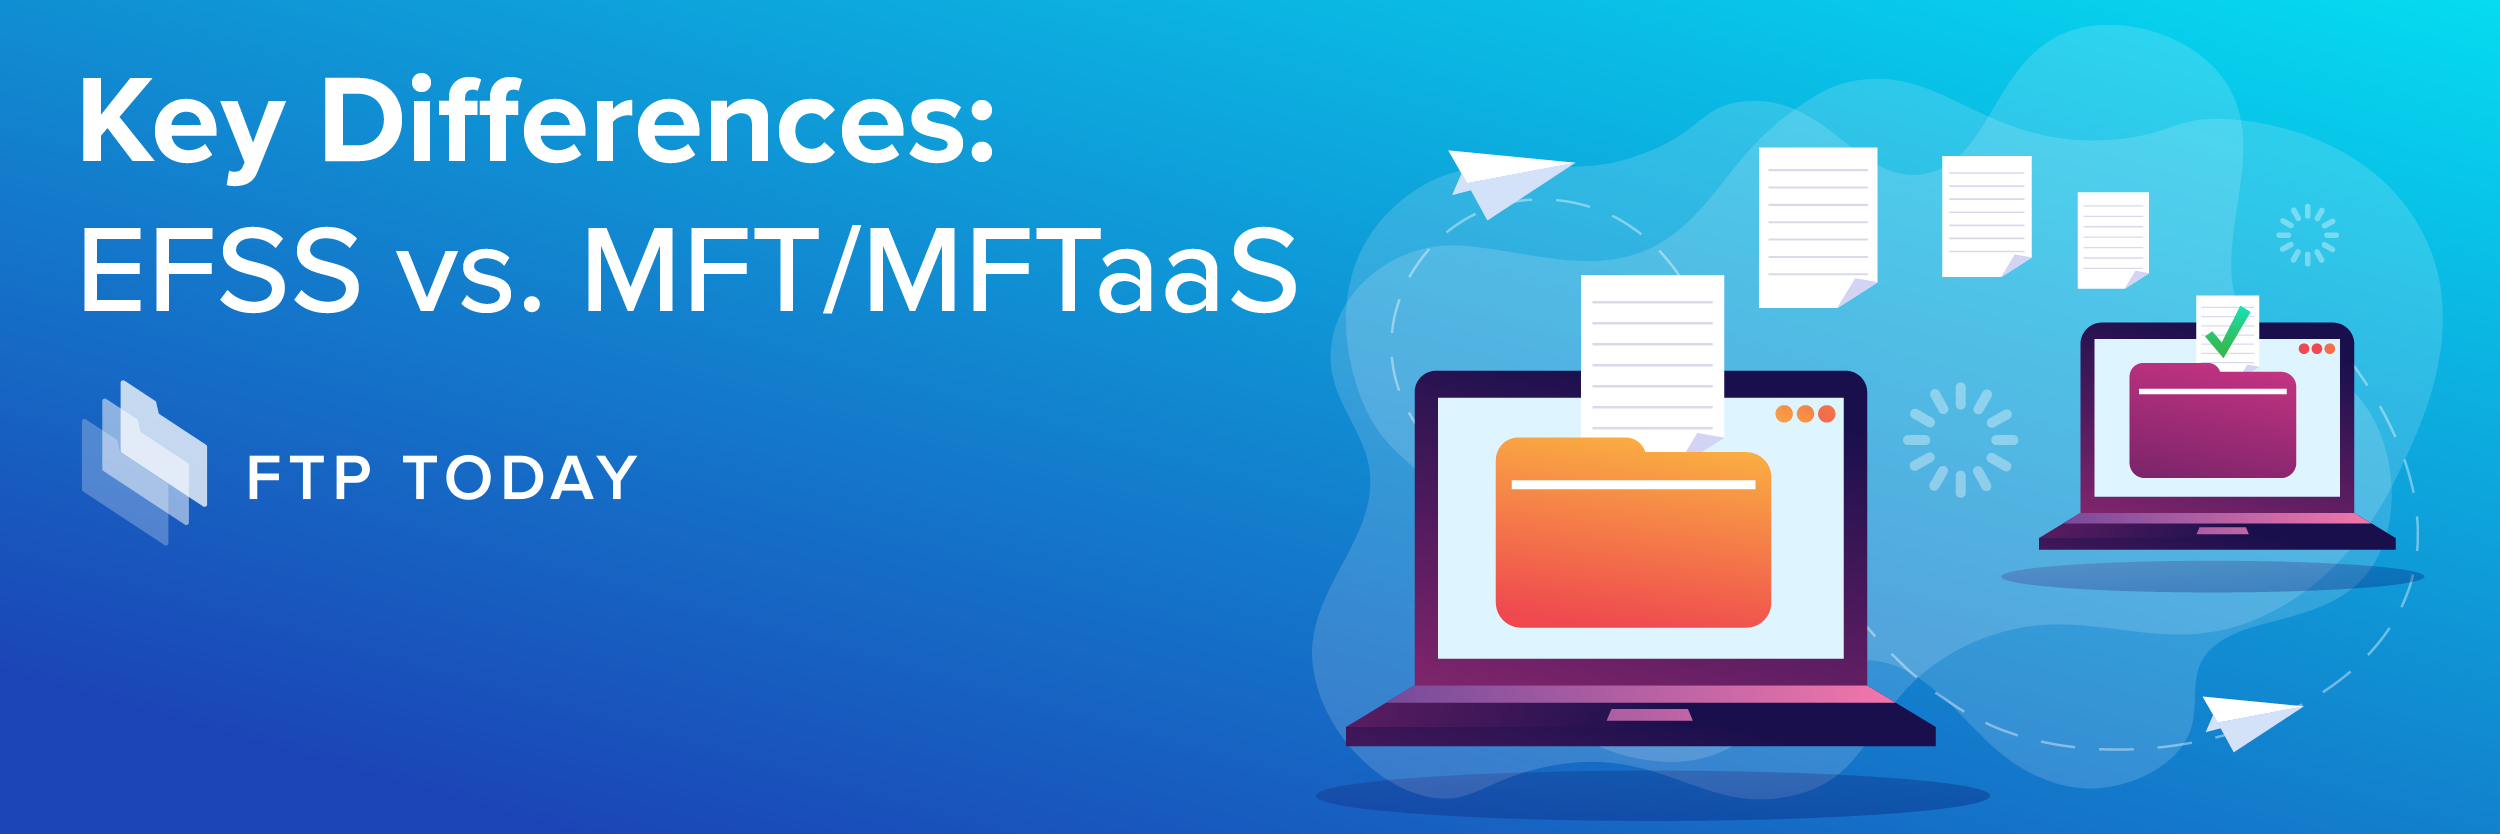 Key Differences: EFSS vs MFT/MFTaaS